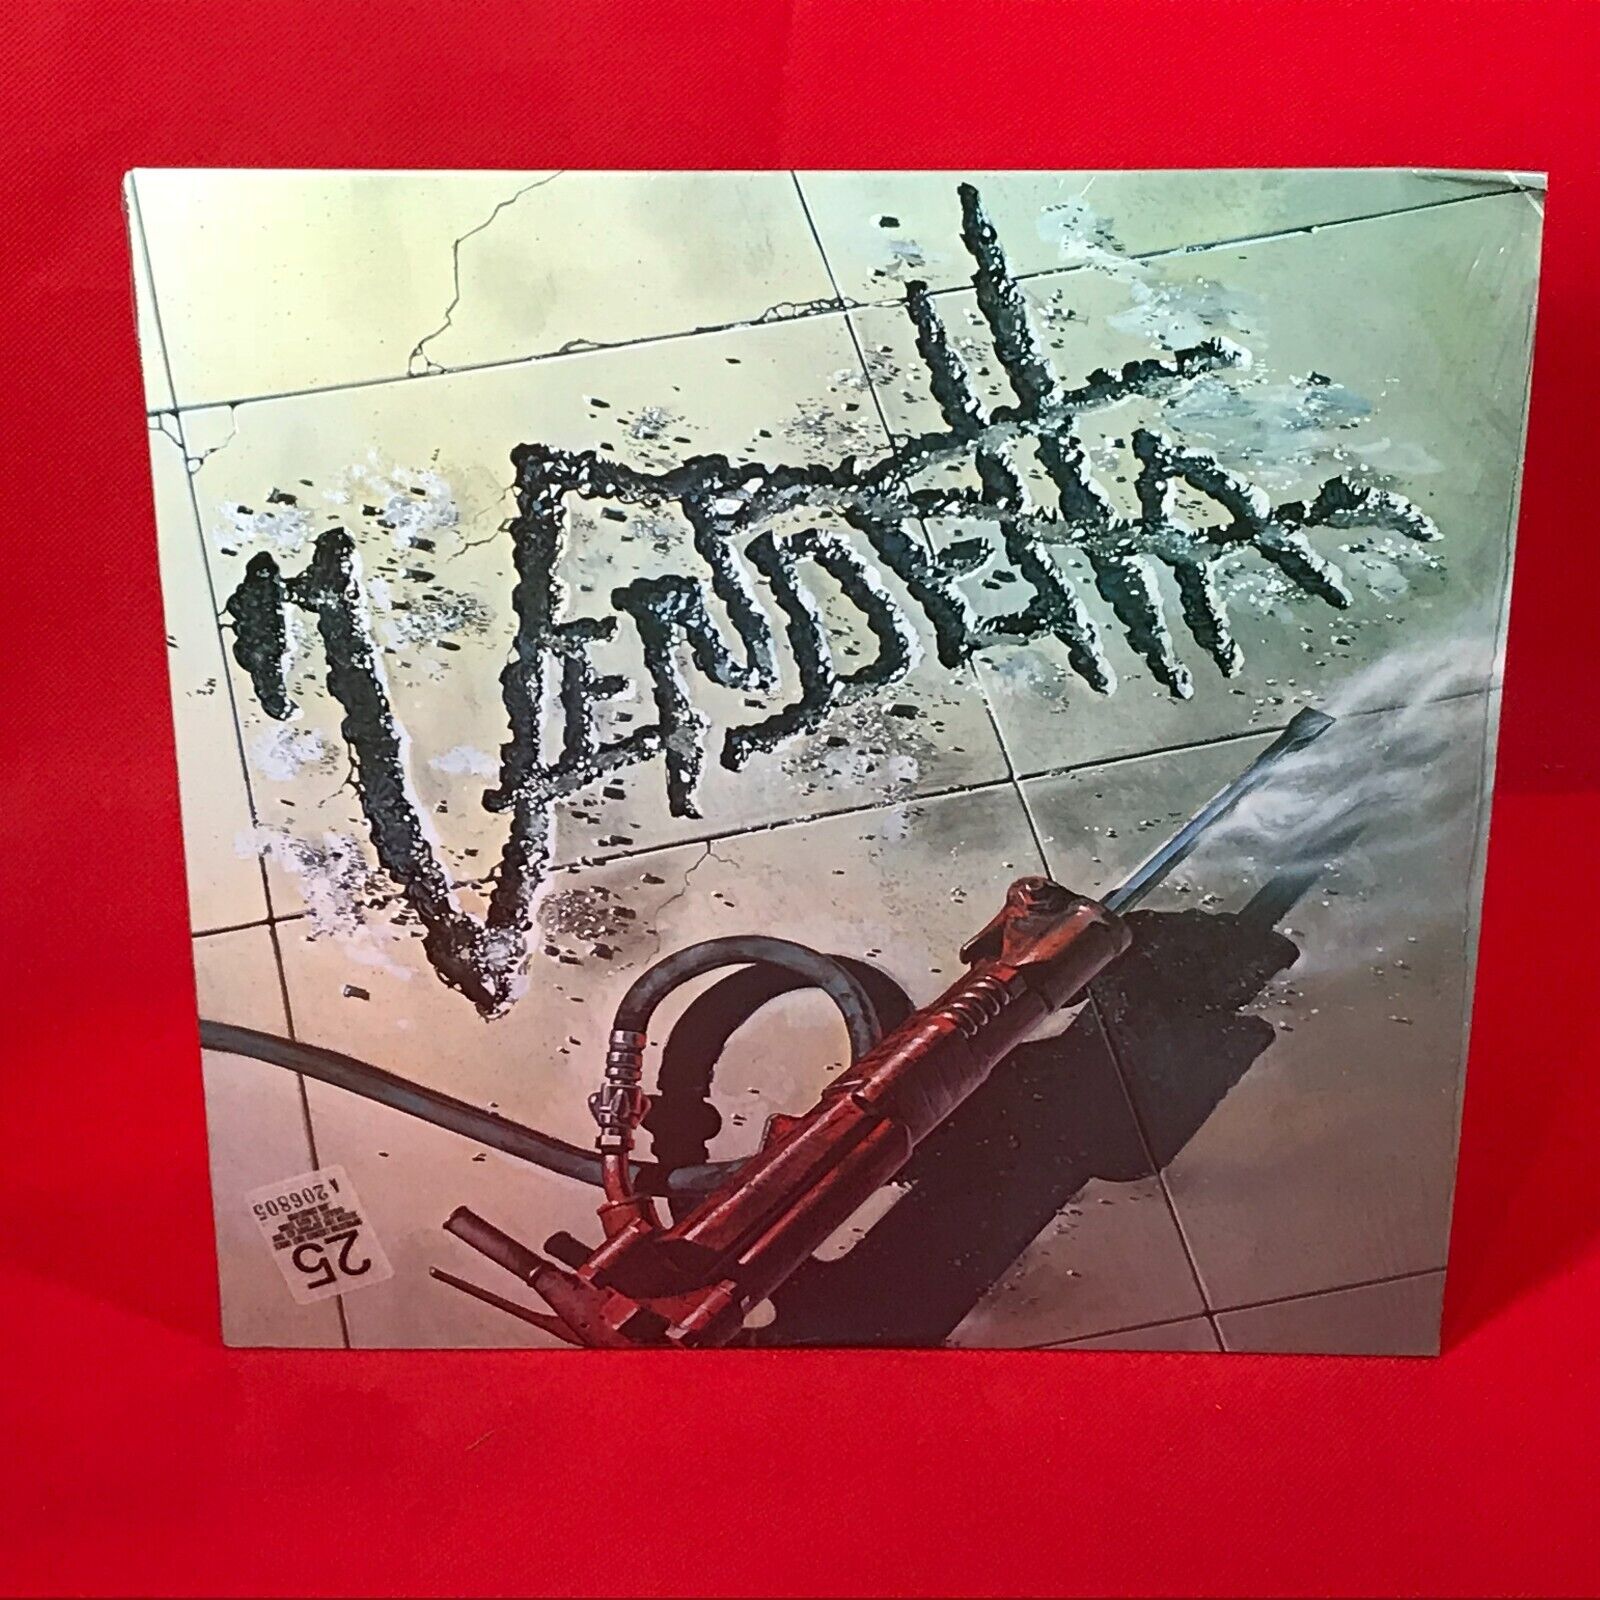 VENDETTA Vendetta 1982 USA Vinyl LP + INNER same ARE 37971  S/T original